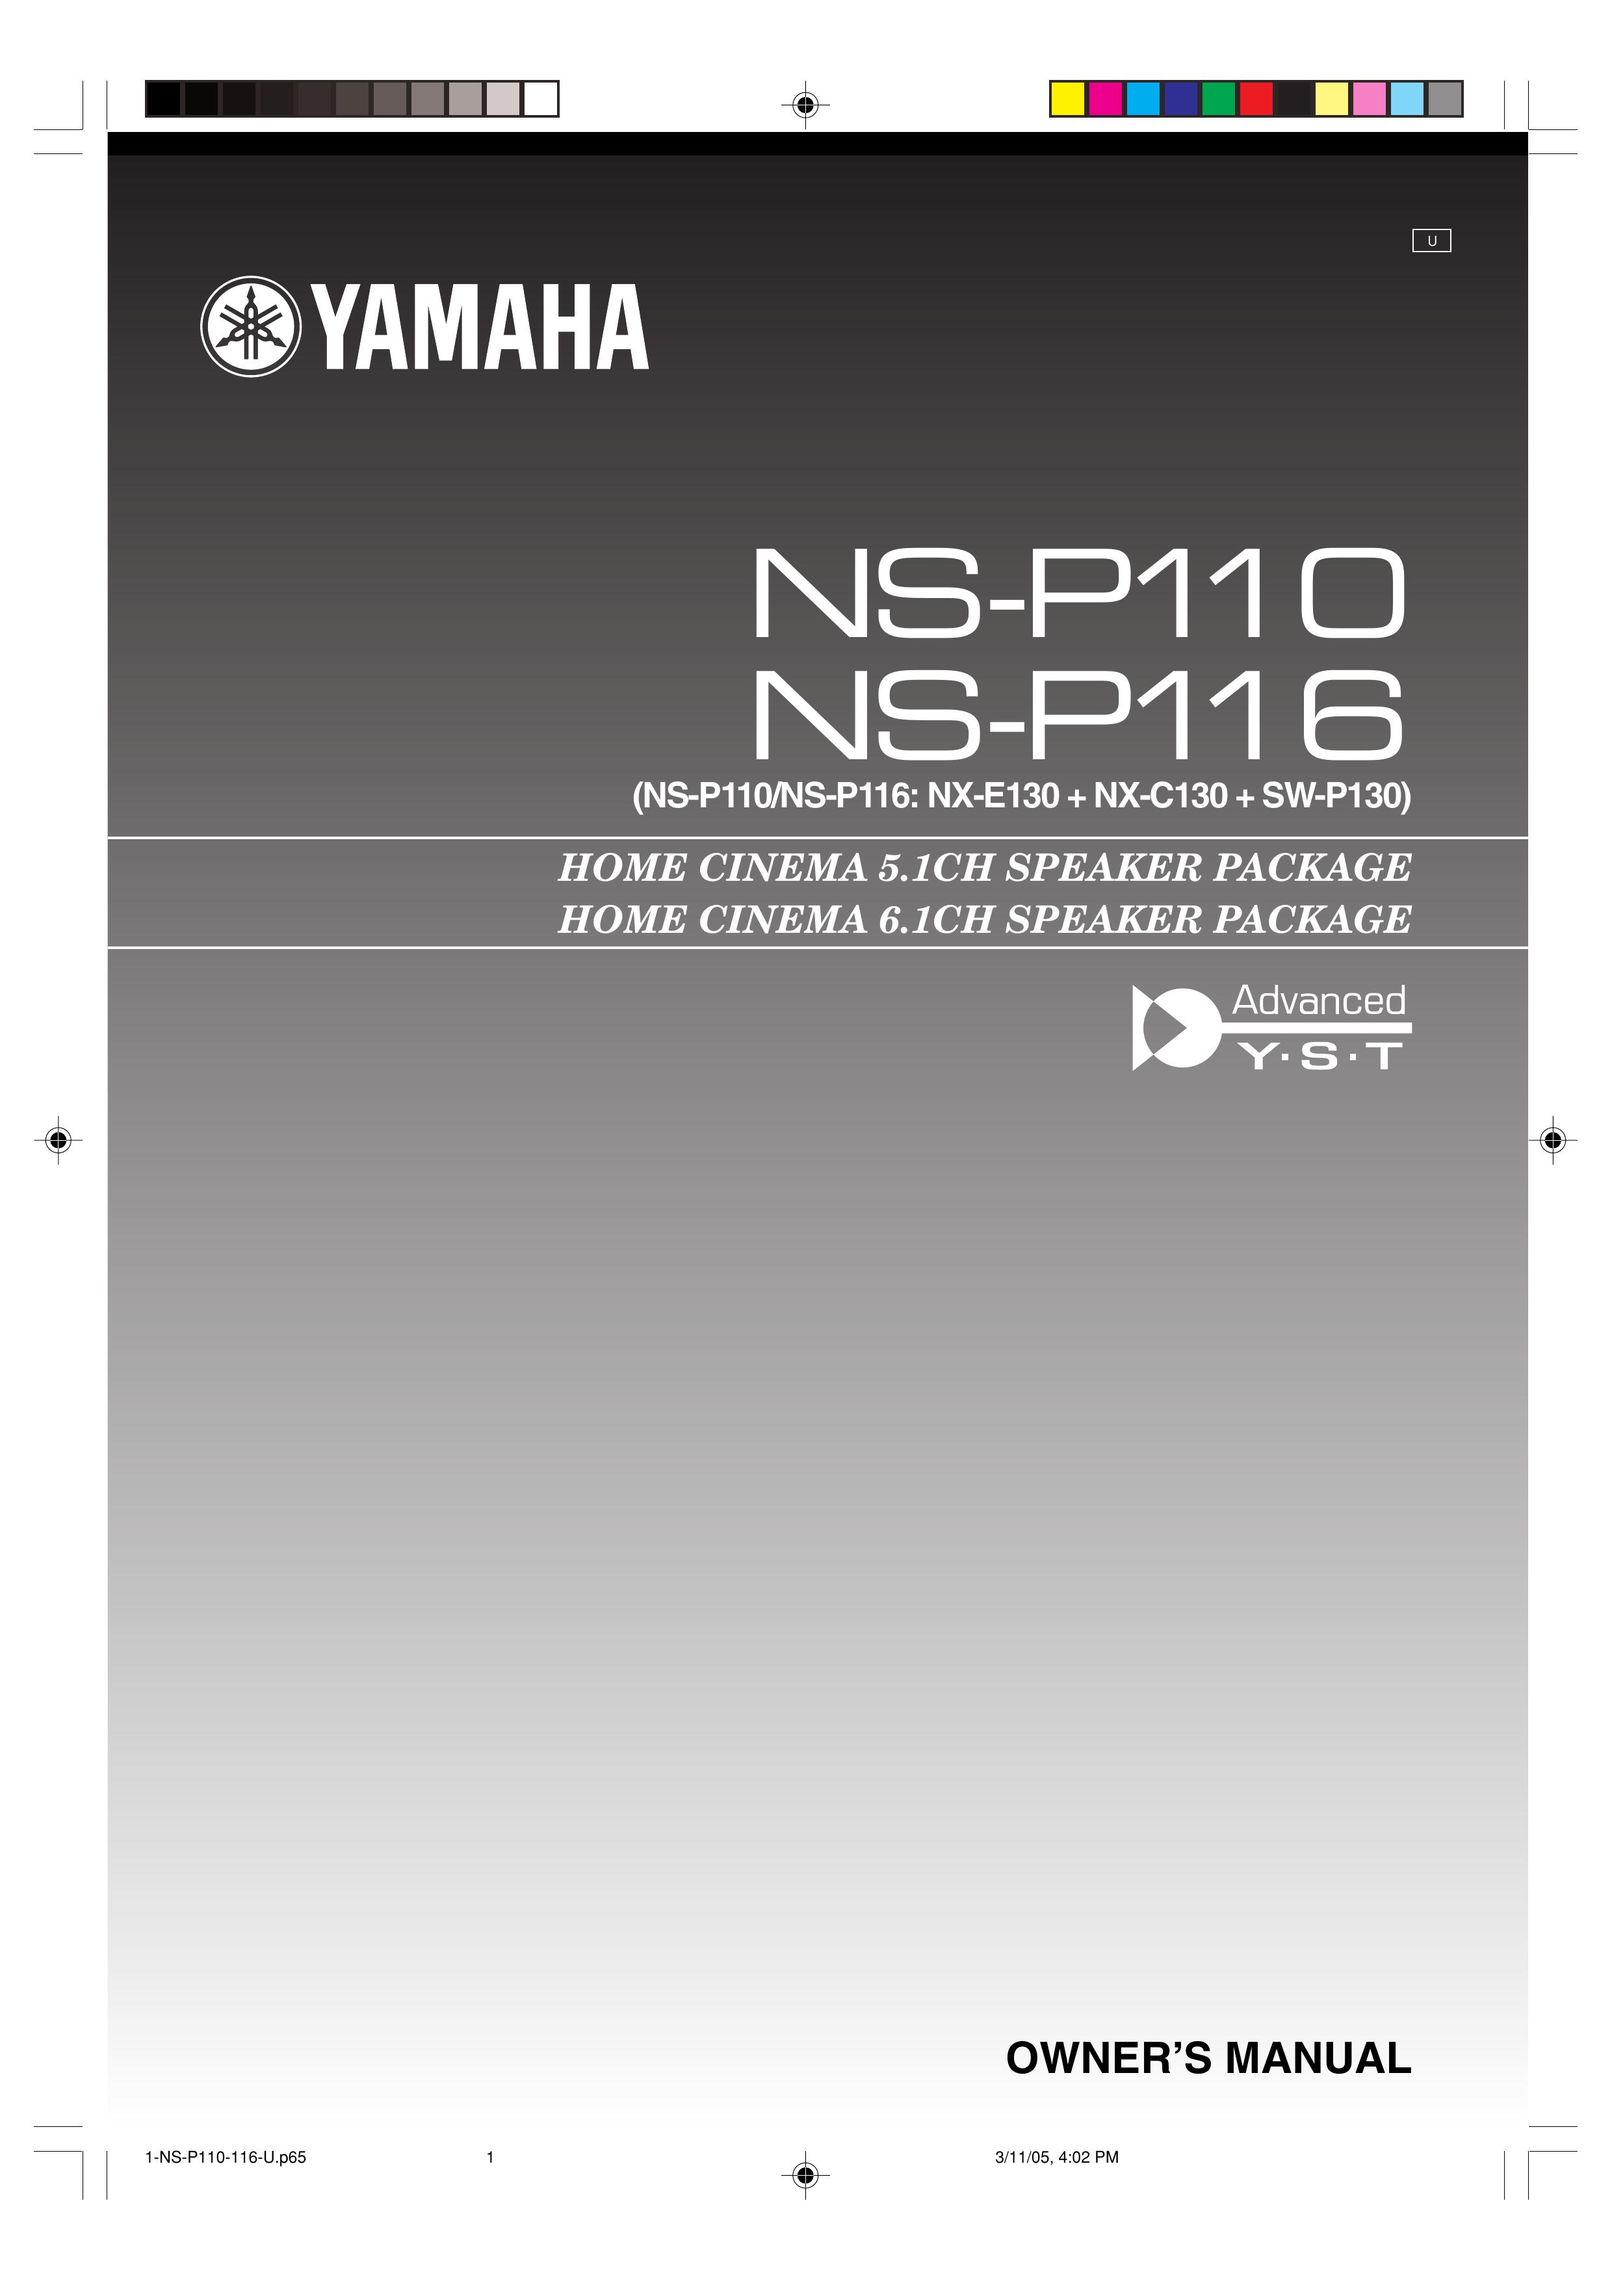 Yamaha NS-P110 Speaker System User Manual